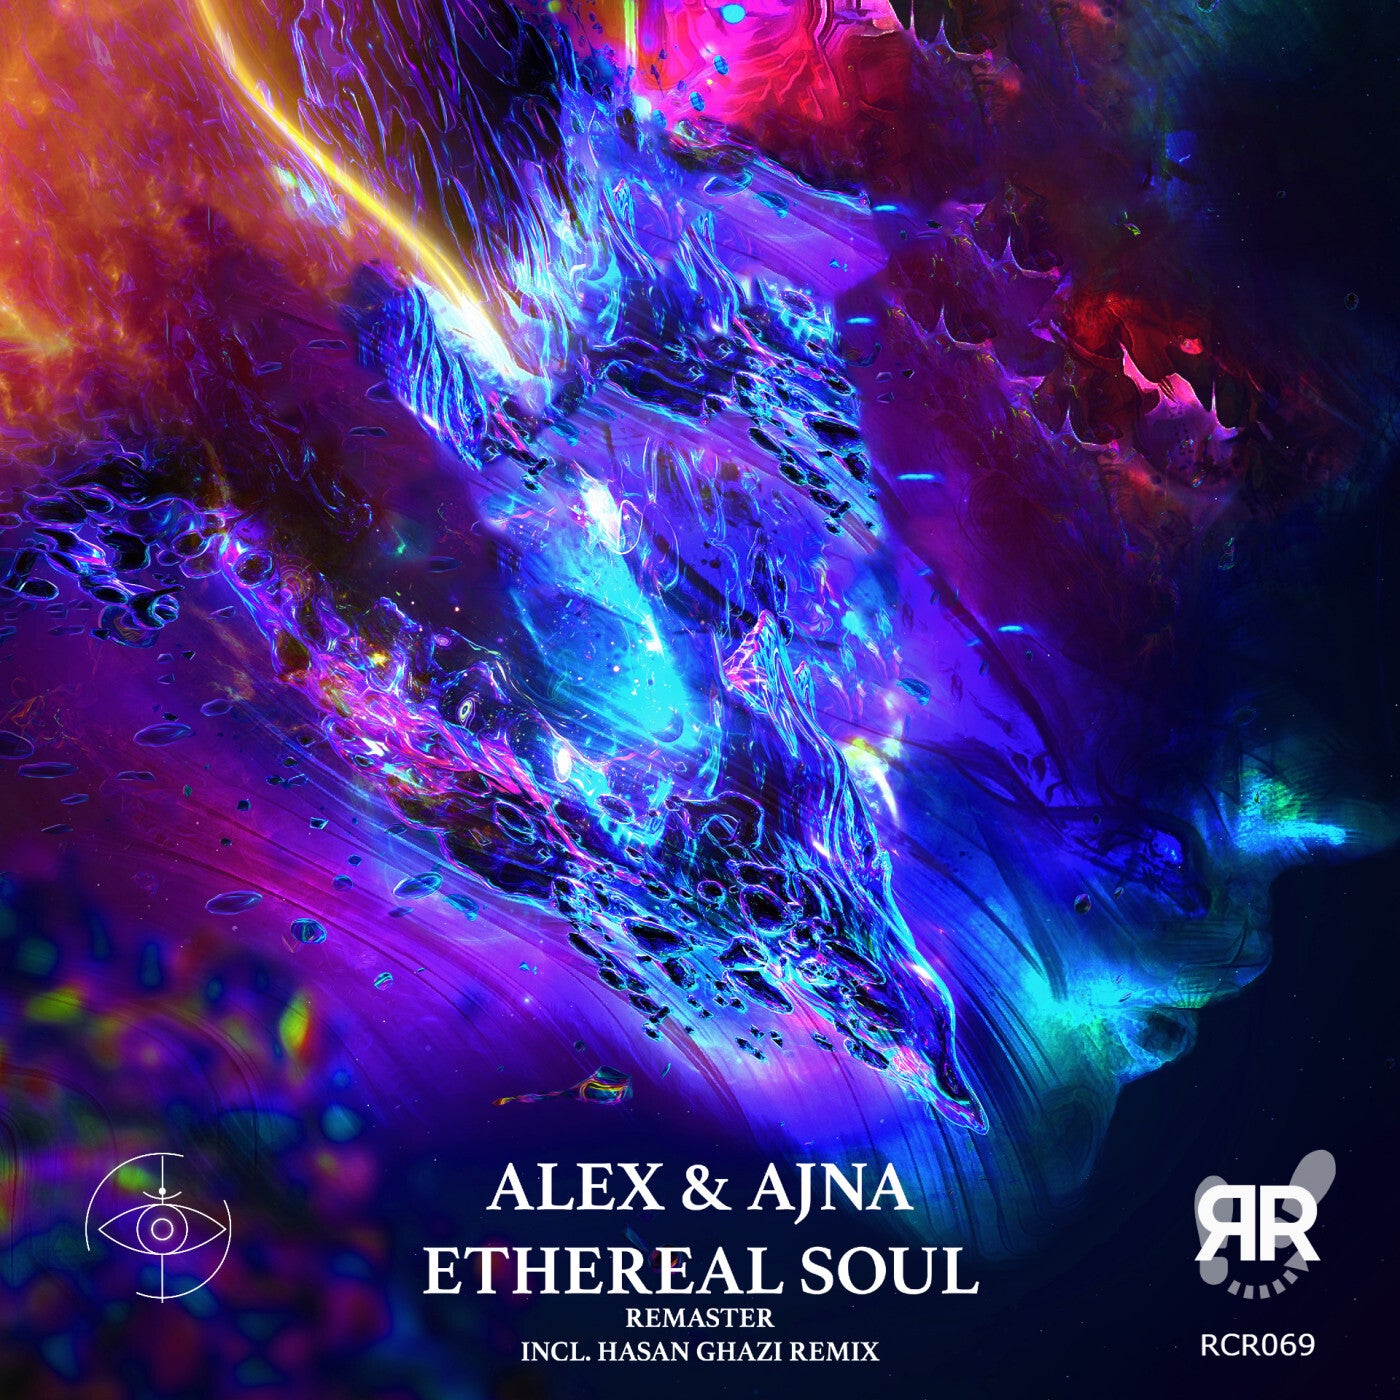 Alex & Ajna - Ethereal Soul Remaster [RCR069]